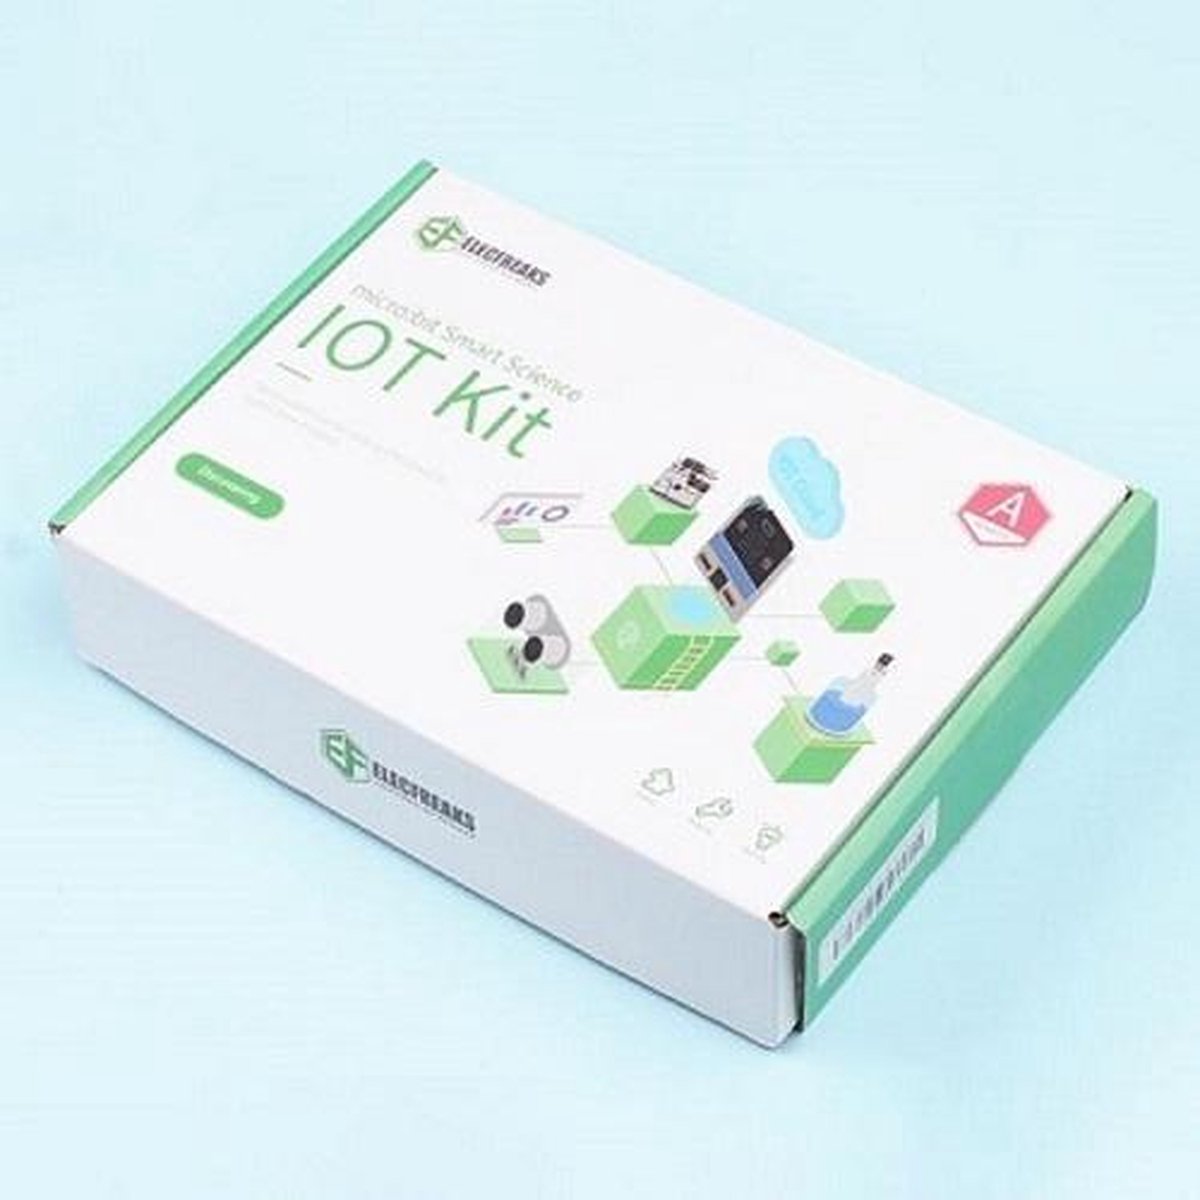 Elecfreaks – Smart Science IoT Kit : micro:bit climate sensors kit for IoT learning [EF08203]